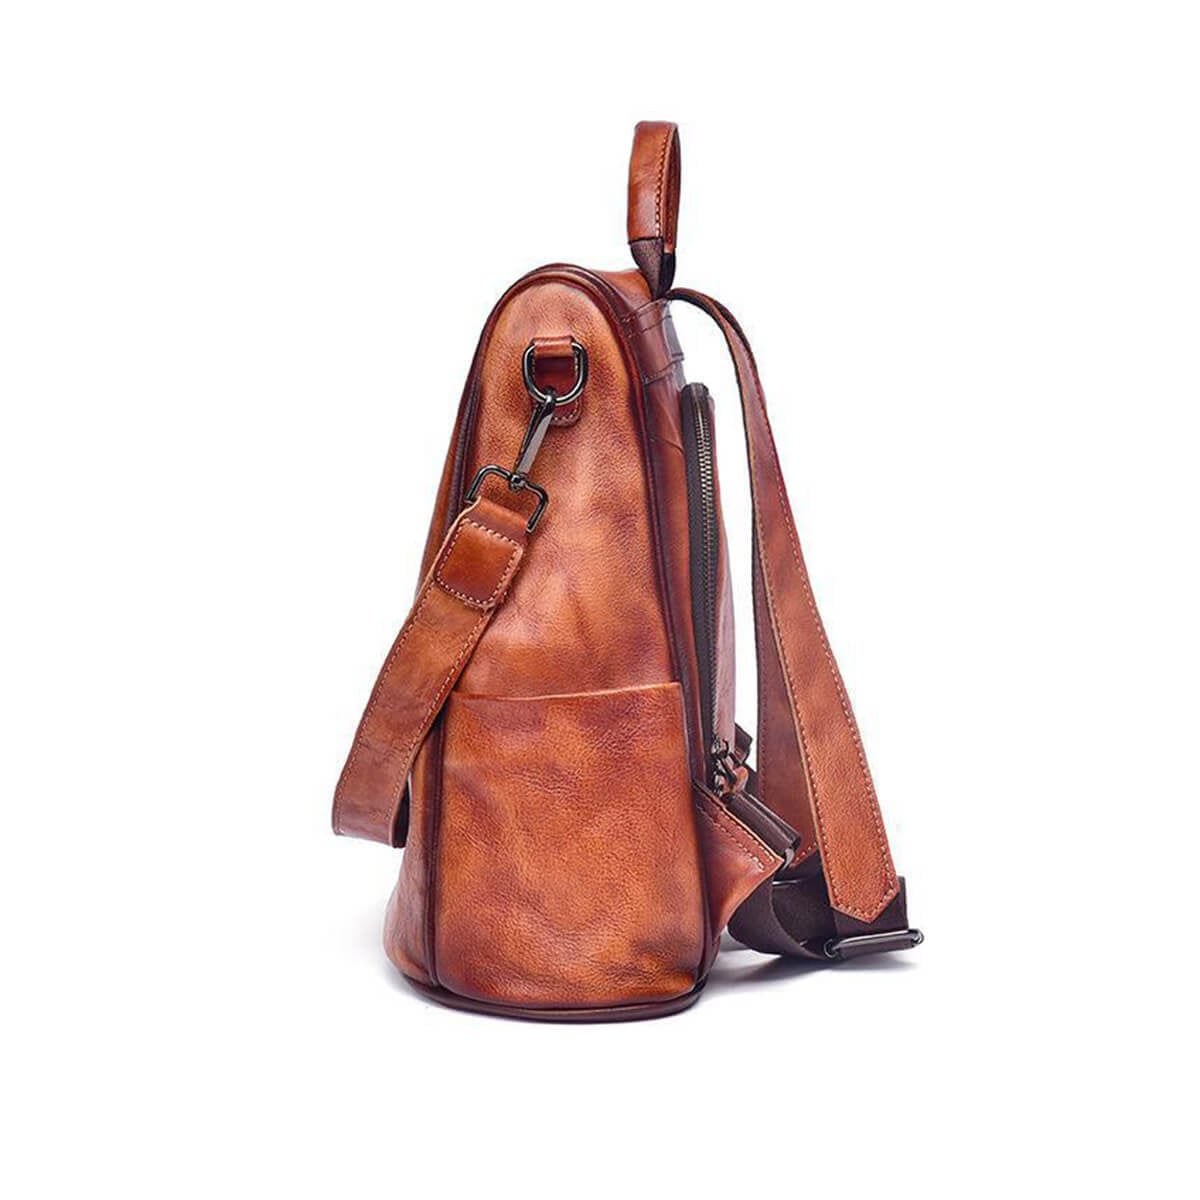 Vintage leather women's backpack